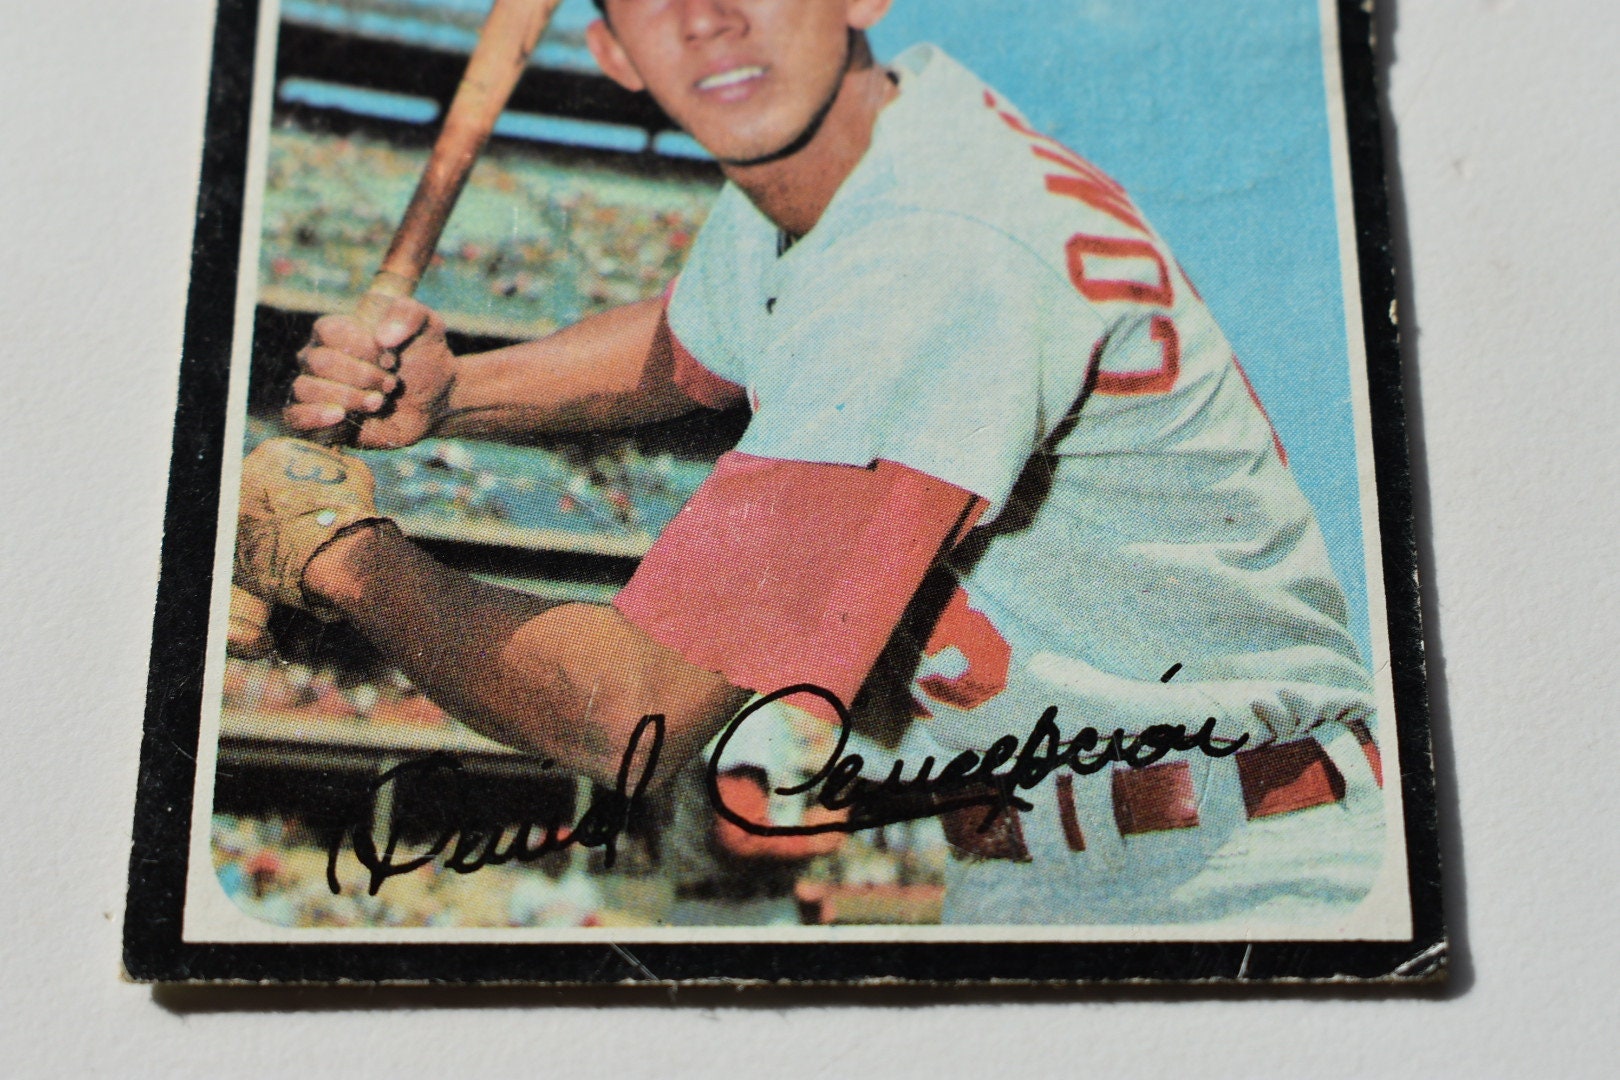 1971 Topps Dave Concepcion #14 Rookie Cincinnati Reds Baseball